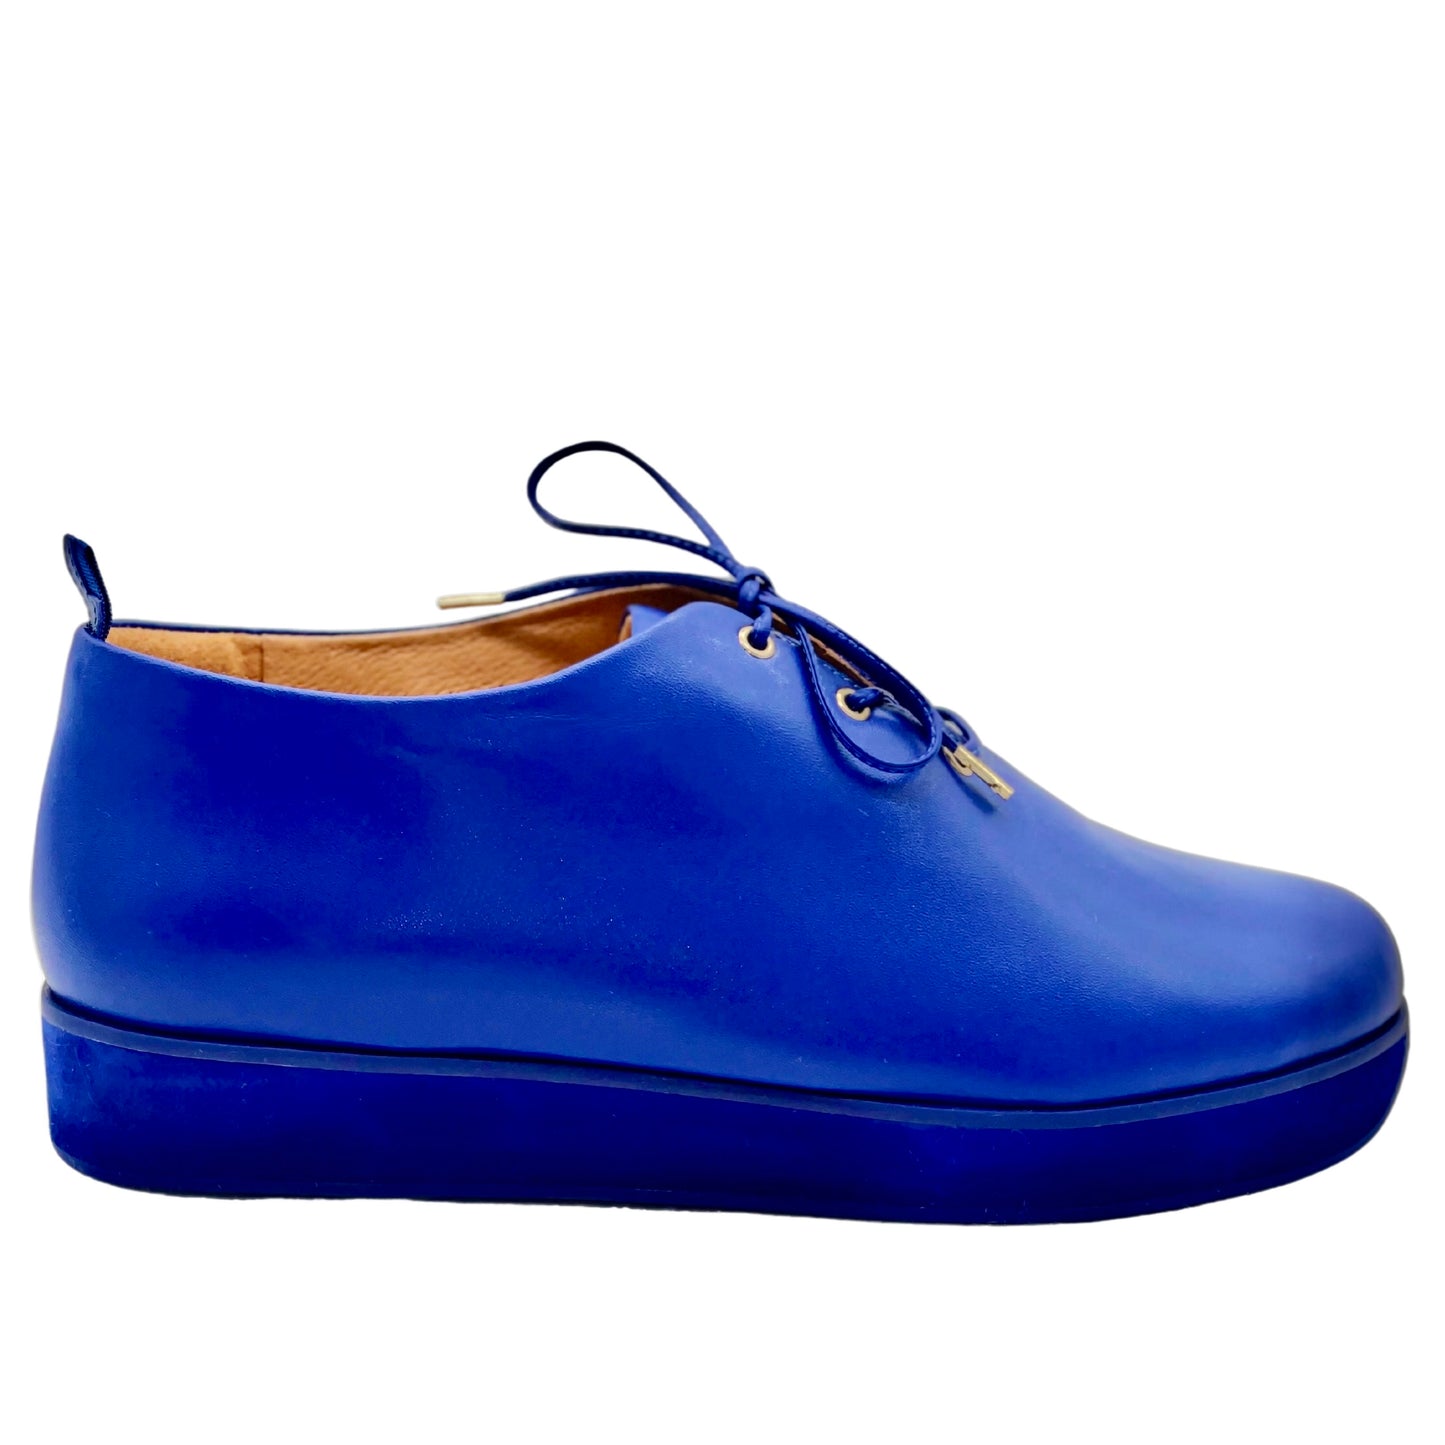 dr LIZA lace-up sneaker - SAPPHIRE BLUE